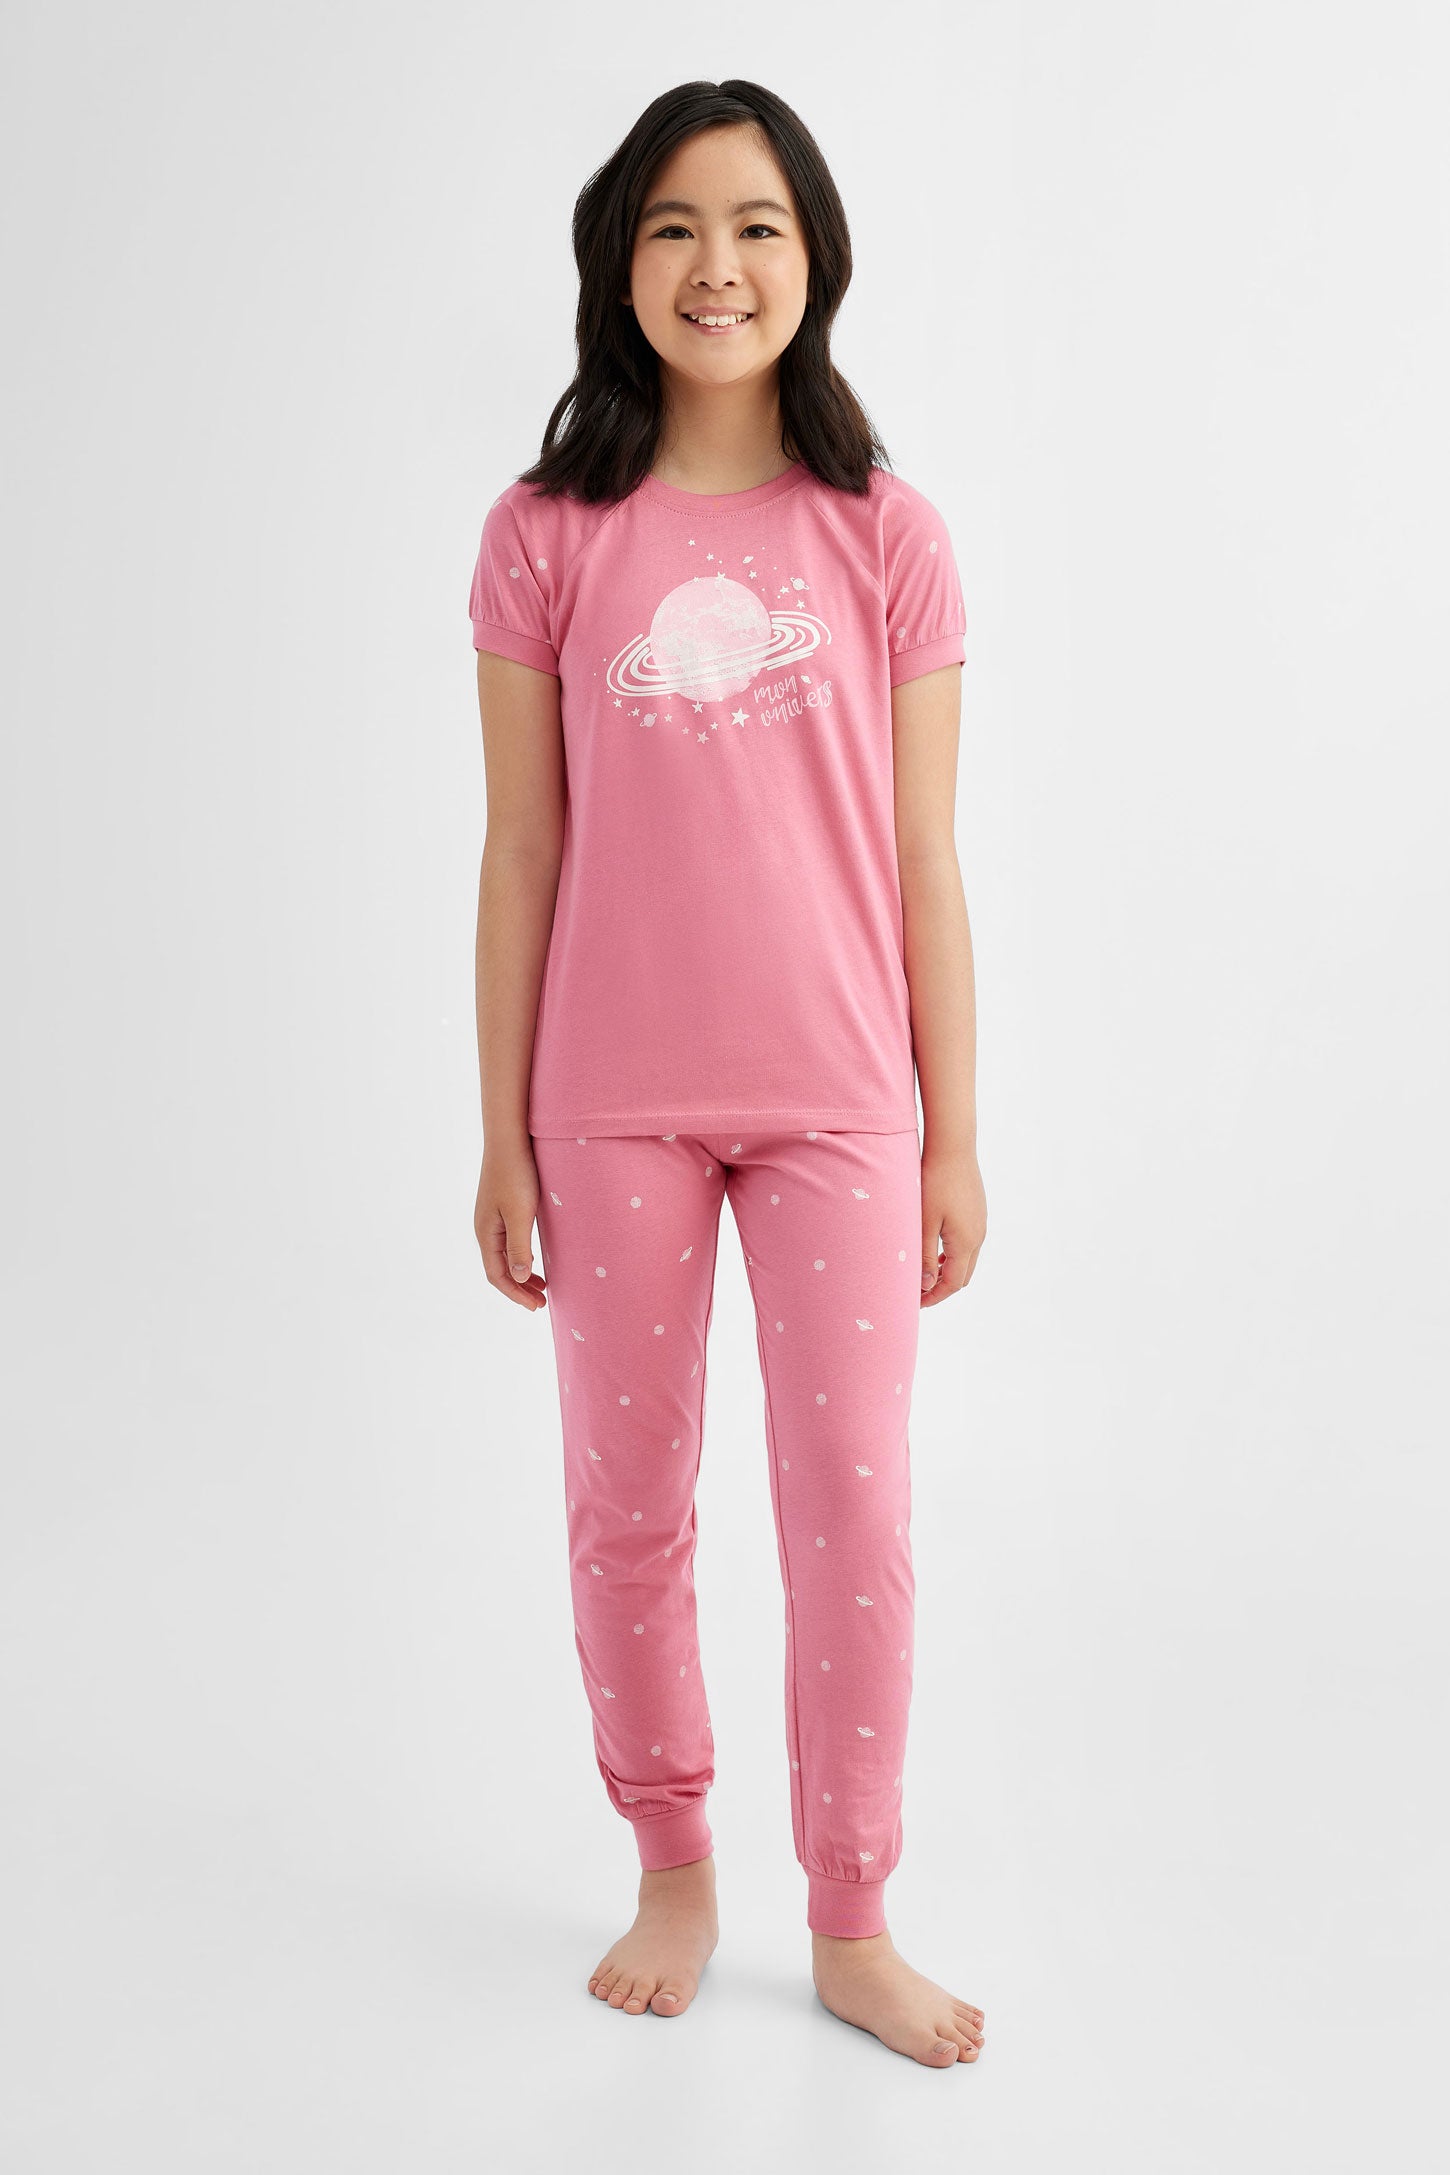 Pyjama 2-pièces en coton, 2/40$ - Ado fille && ROSE FONCE